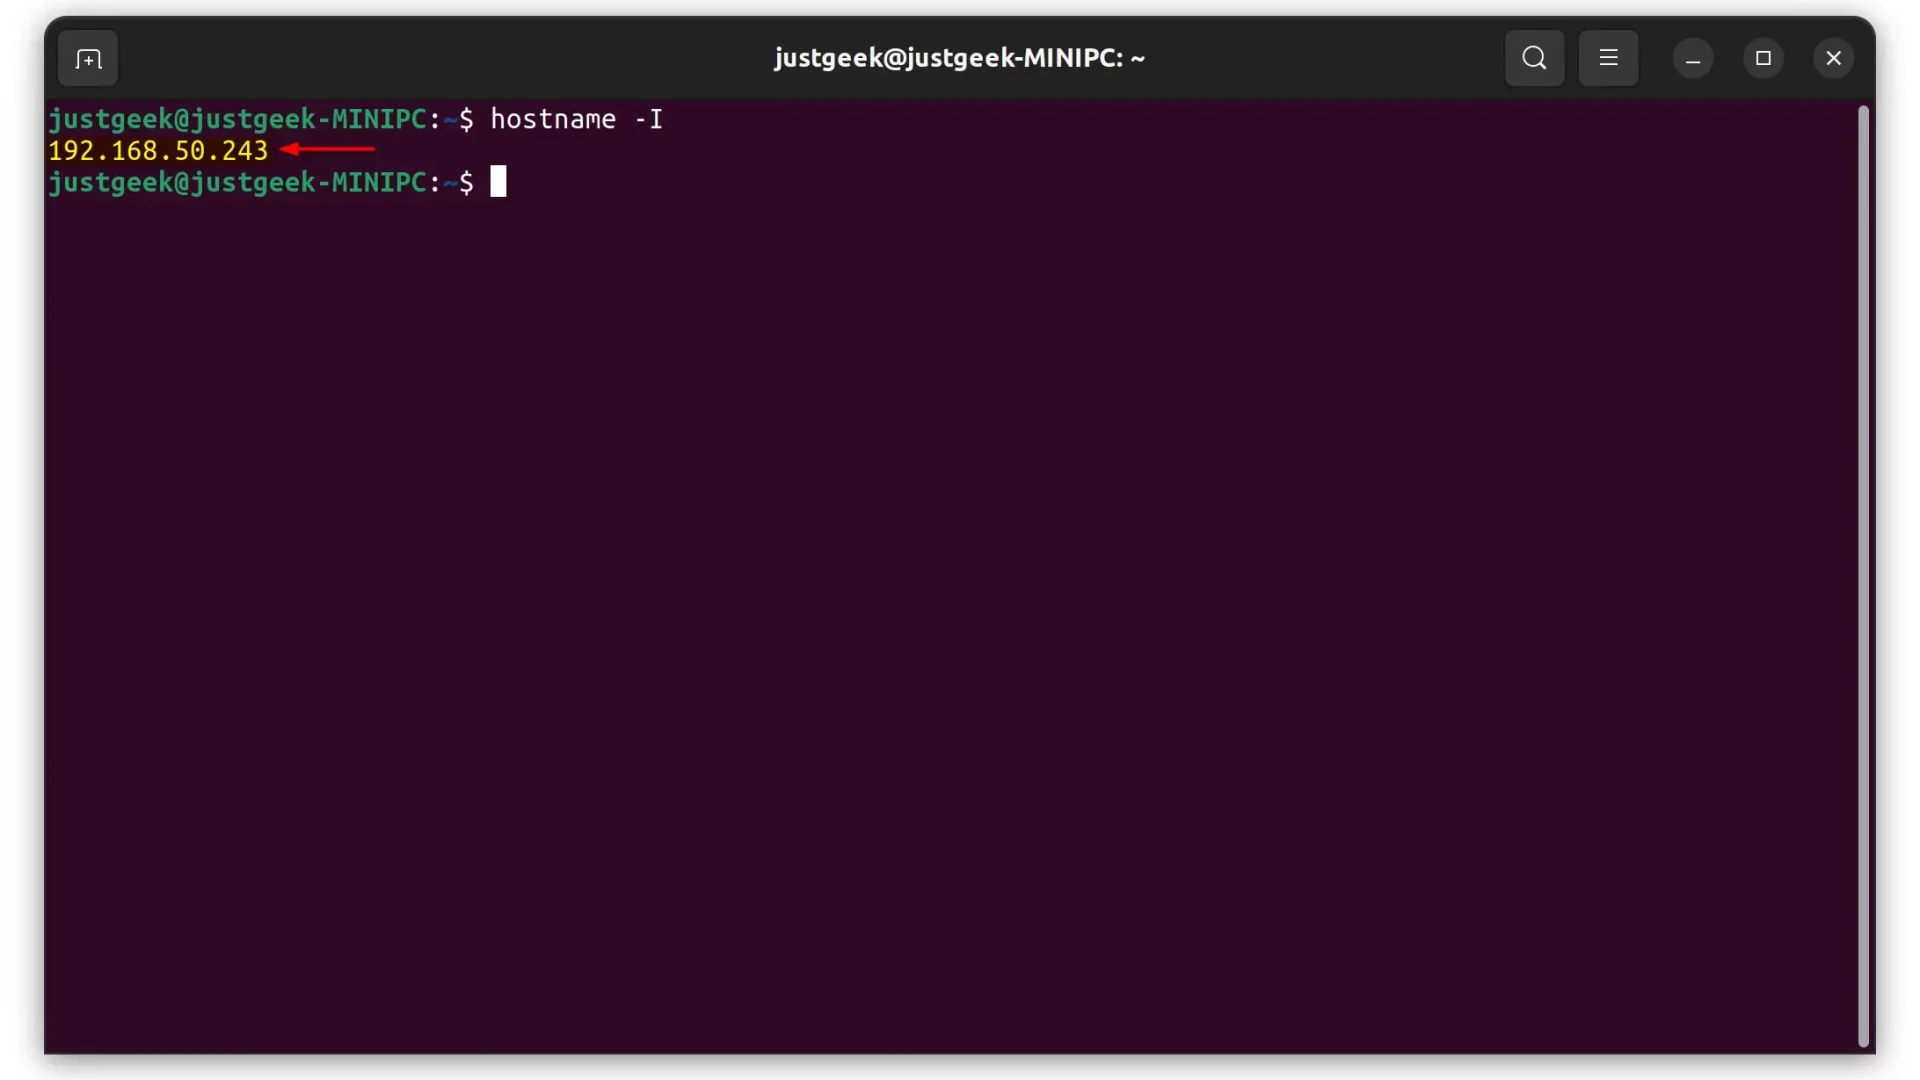 Utilisation du terminal Ubuntu pour obtenir l'adresse IP locale avec la commande hostname -I.